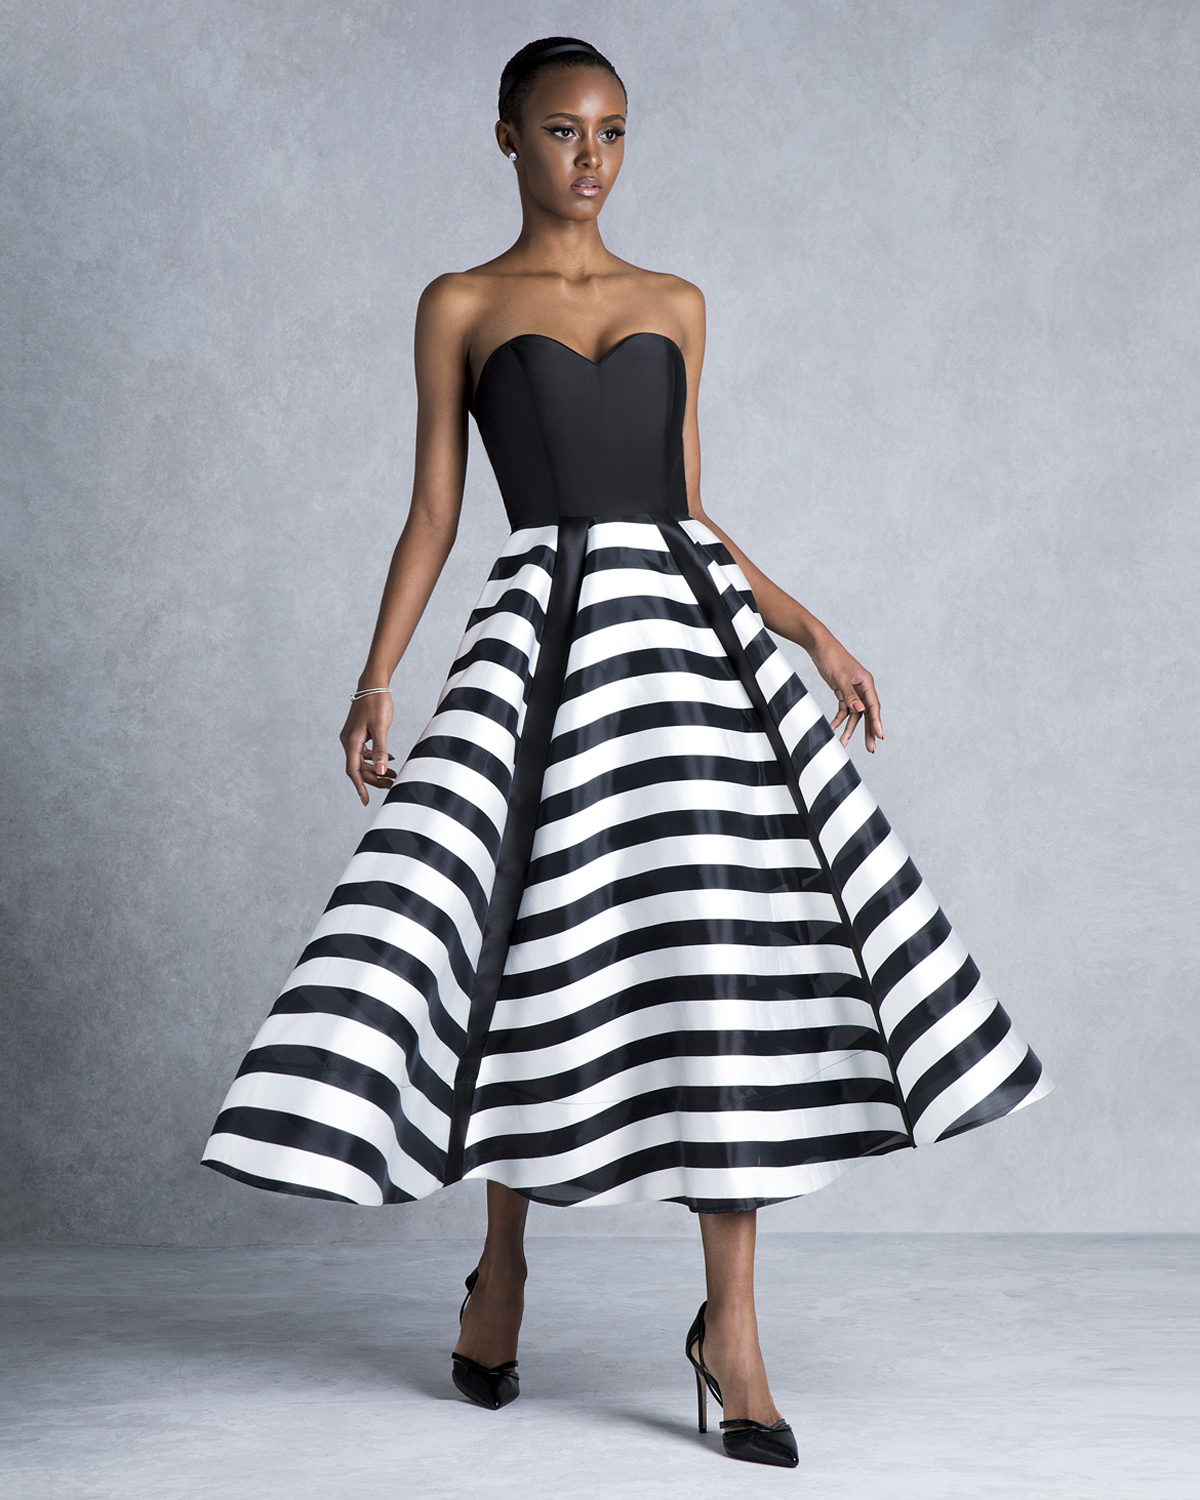 Evening Dresses / Long evening strapless black and white dress